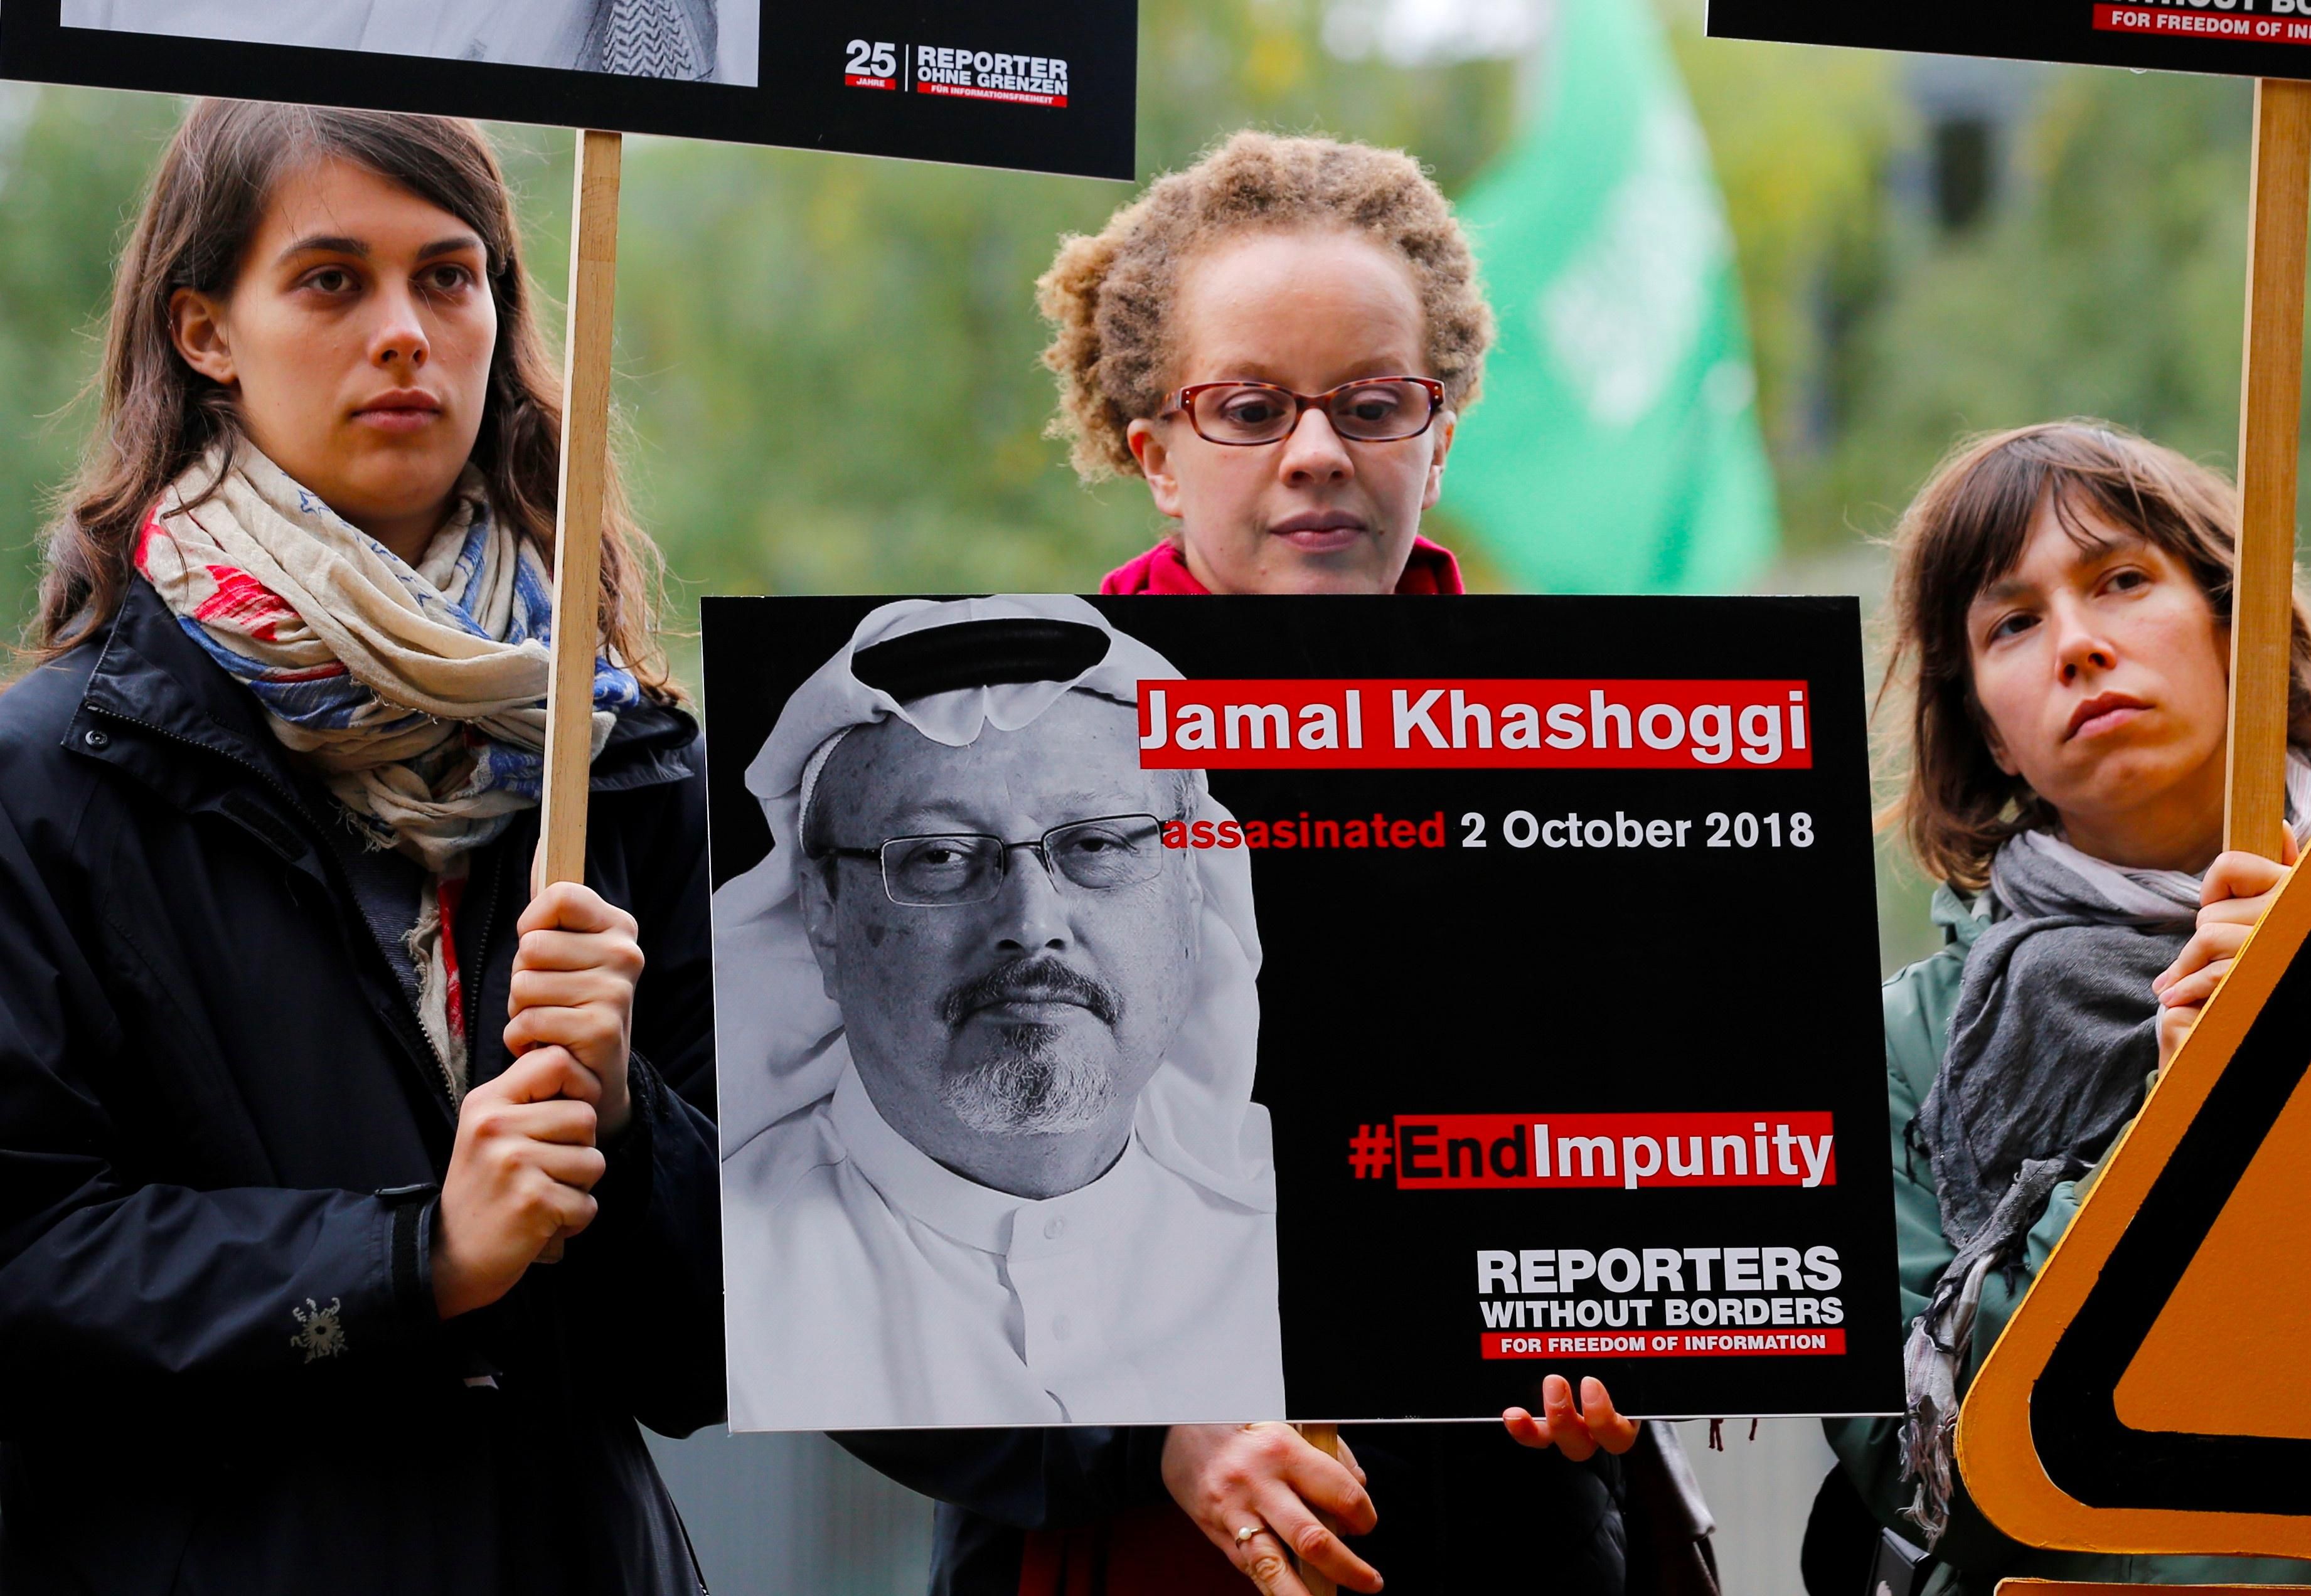 Protesters attend a vigil for Jamal Khashoggi